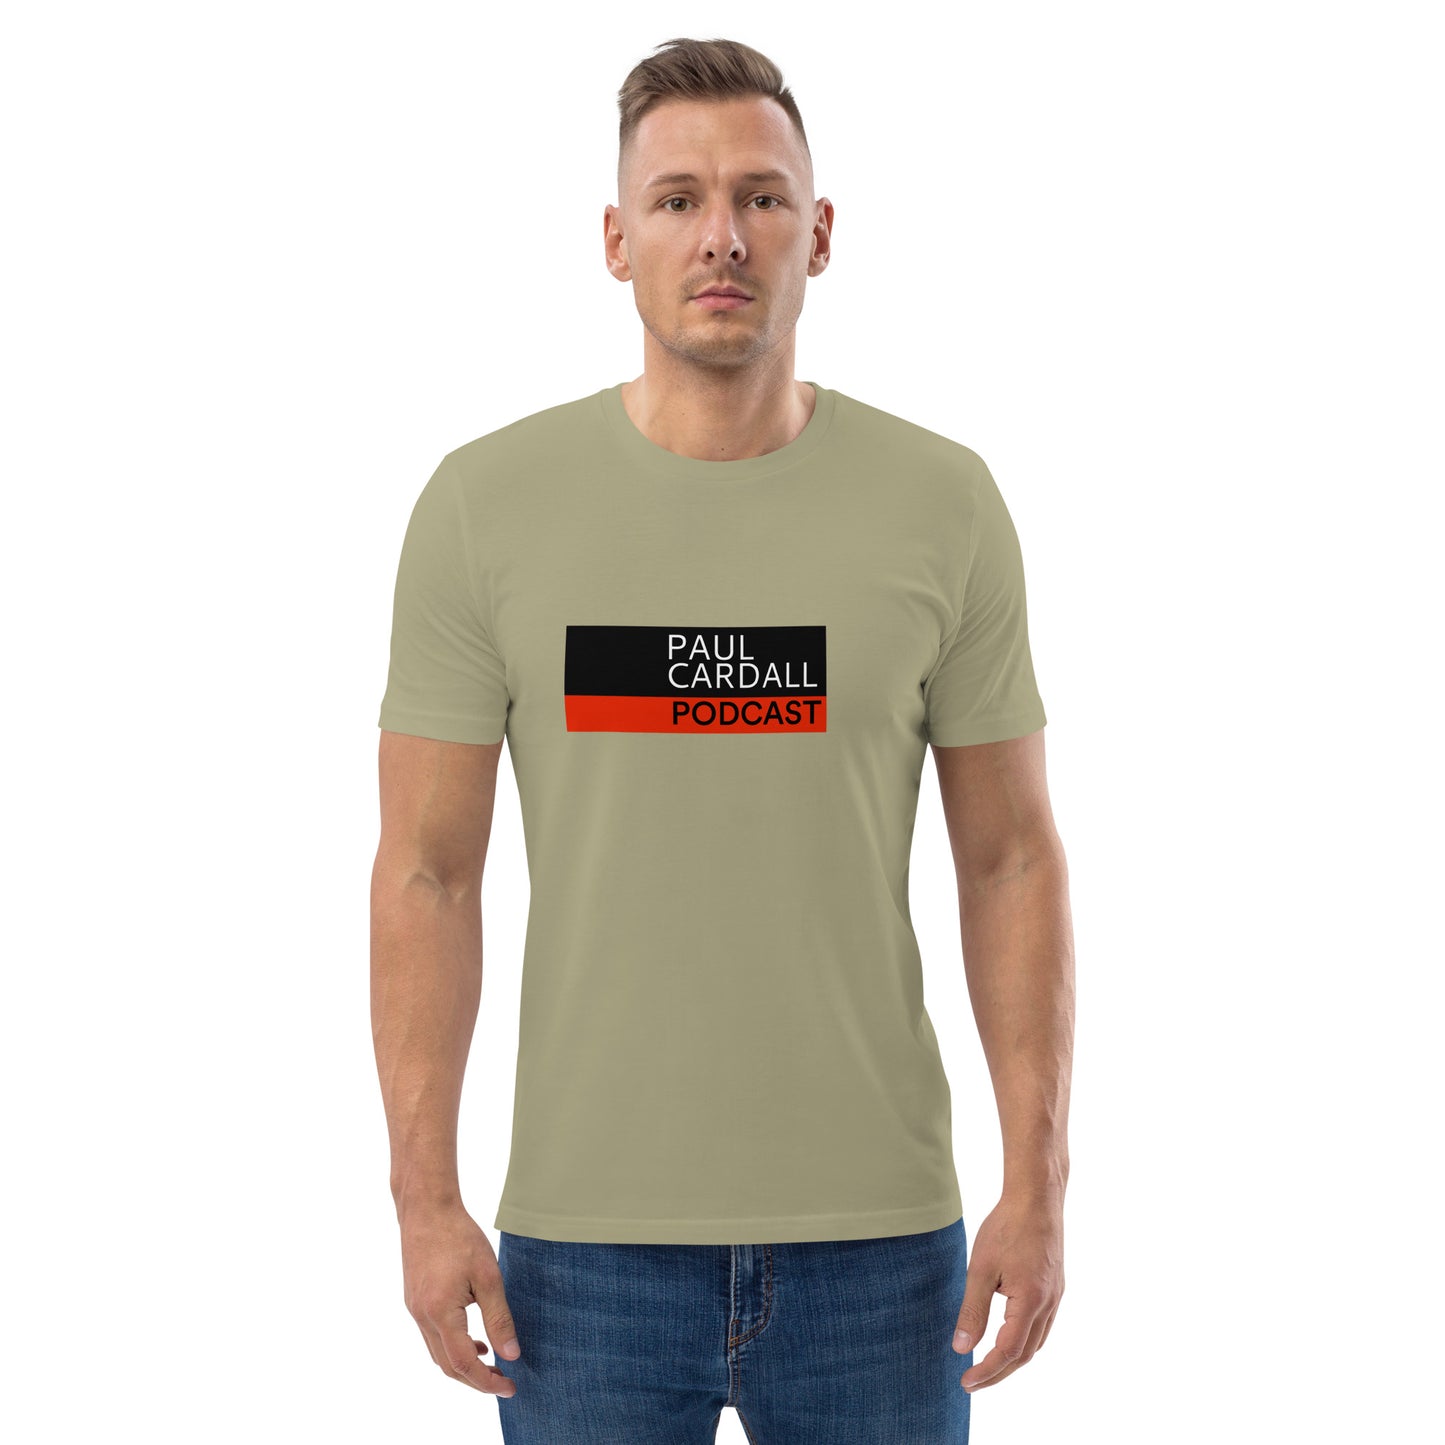 Paul Cardall Podcast Unisex organic cotton t-shirt